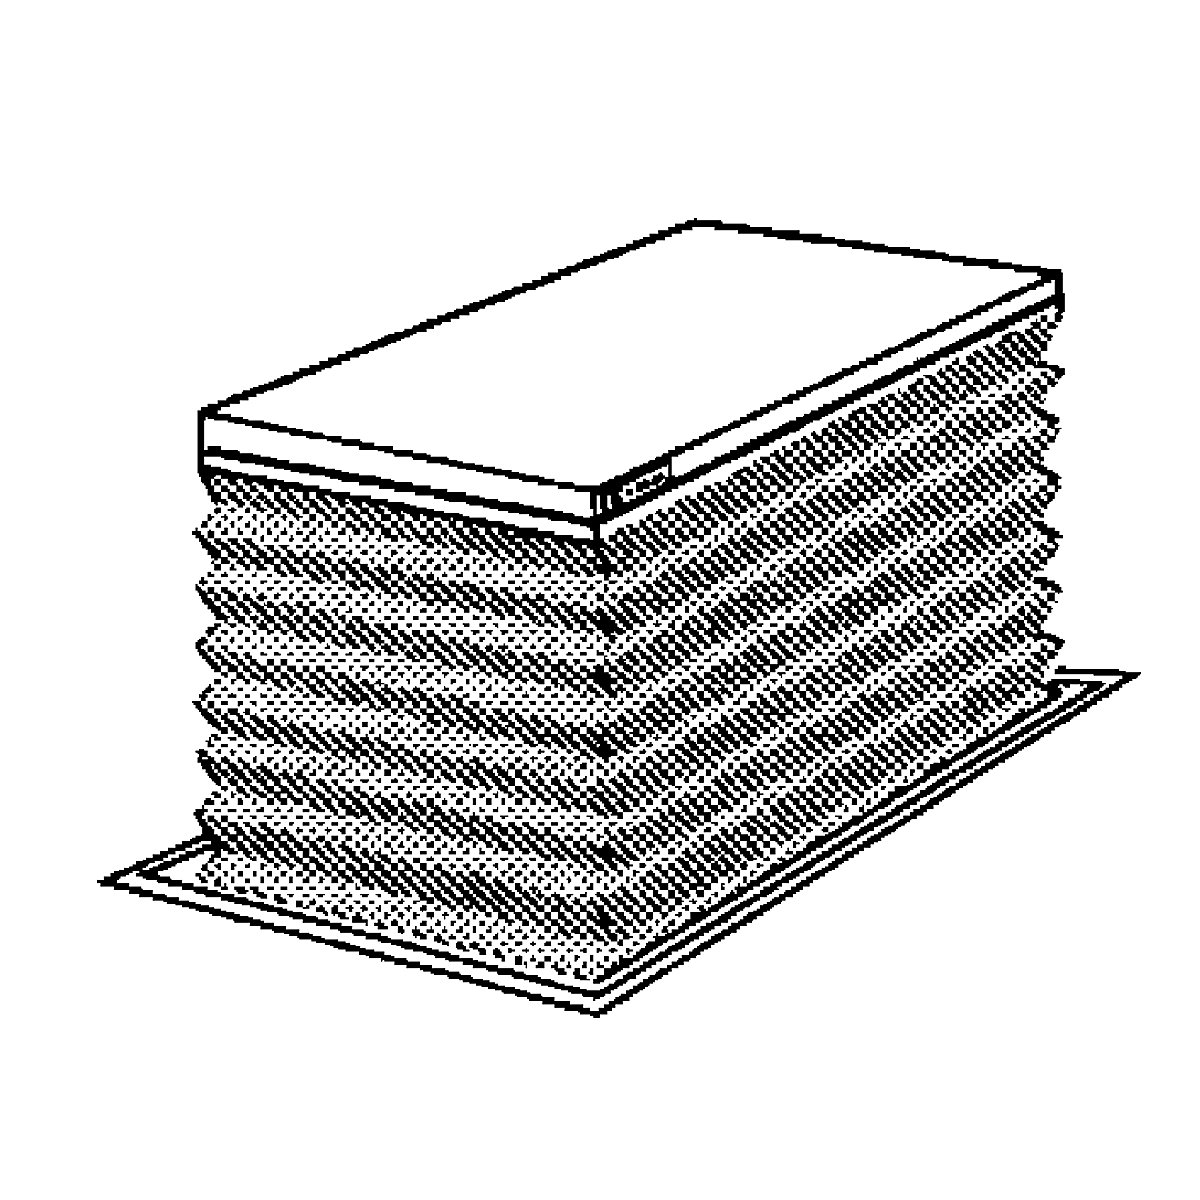 Compact lift table – Edmolift (Product illustration 12)